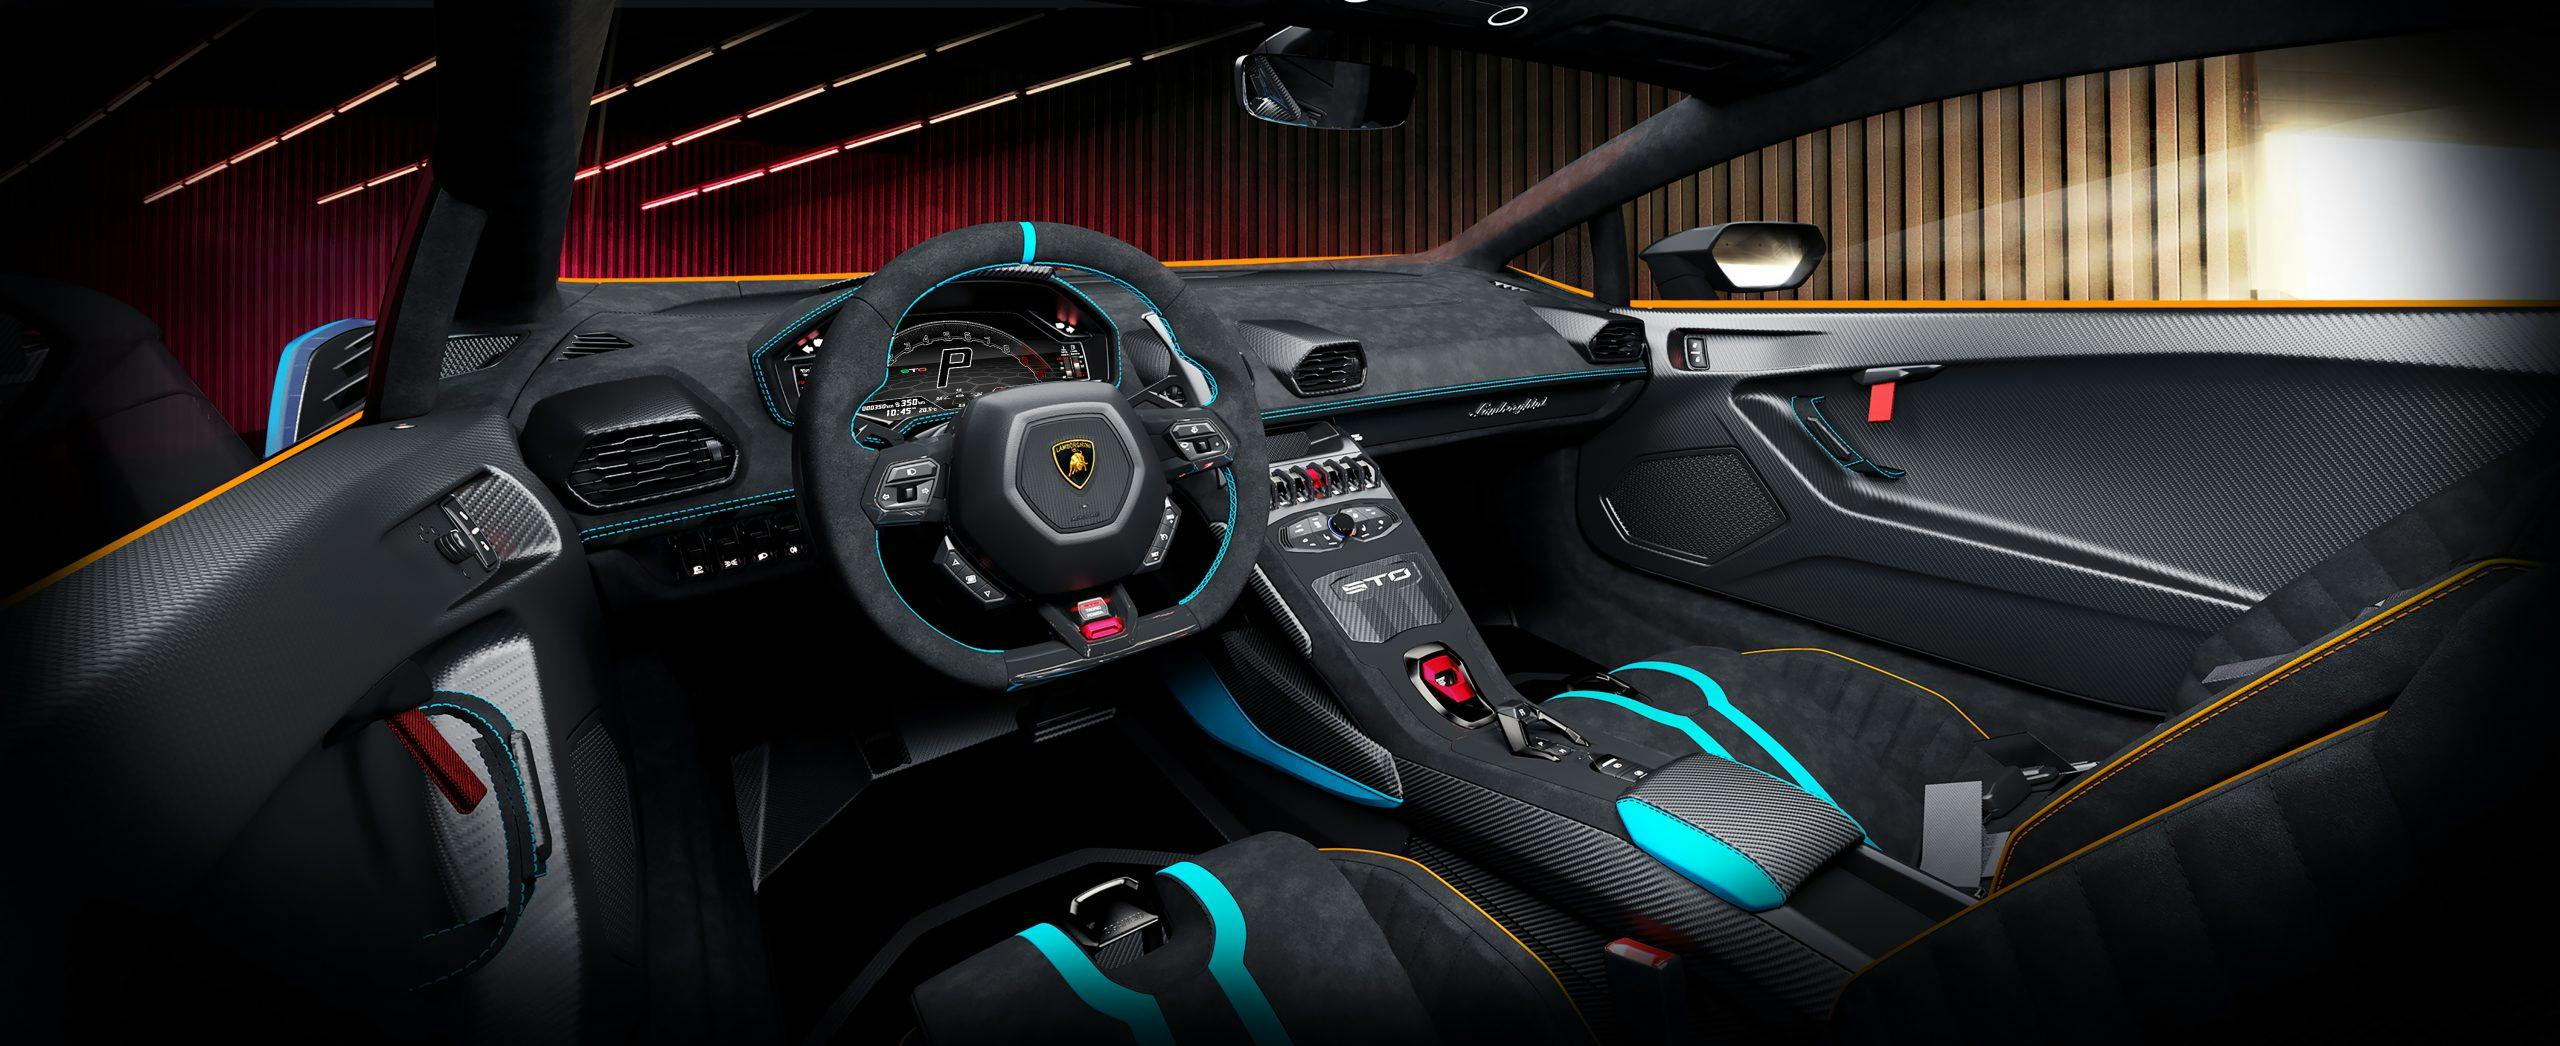 Lamborghini Huracan STO interior garage